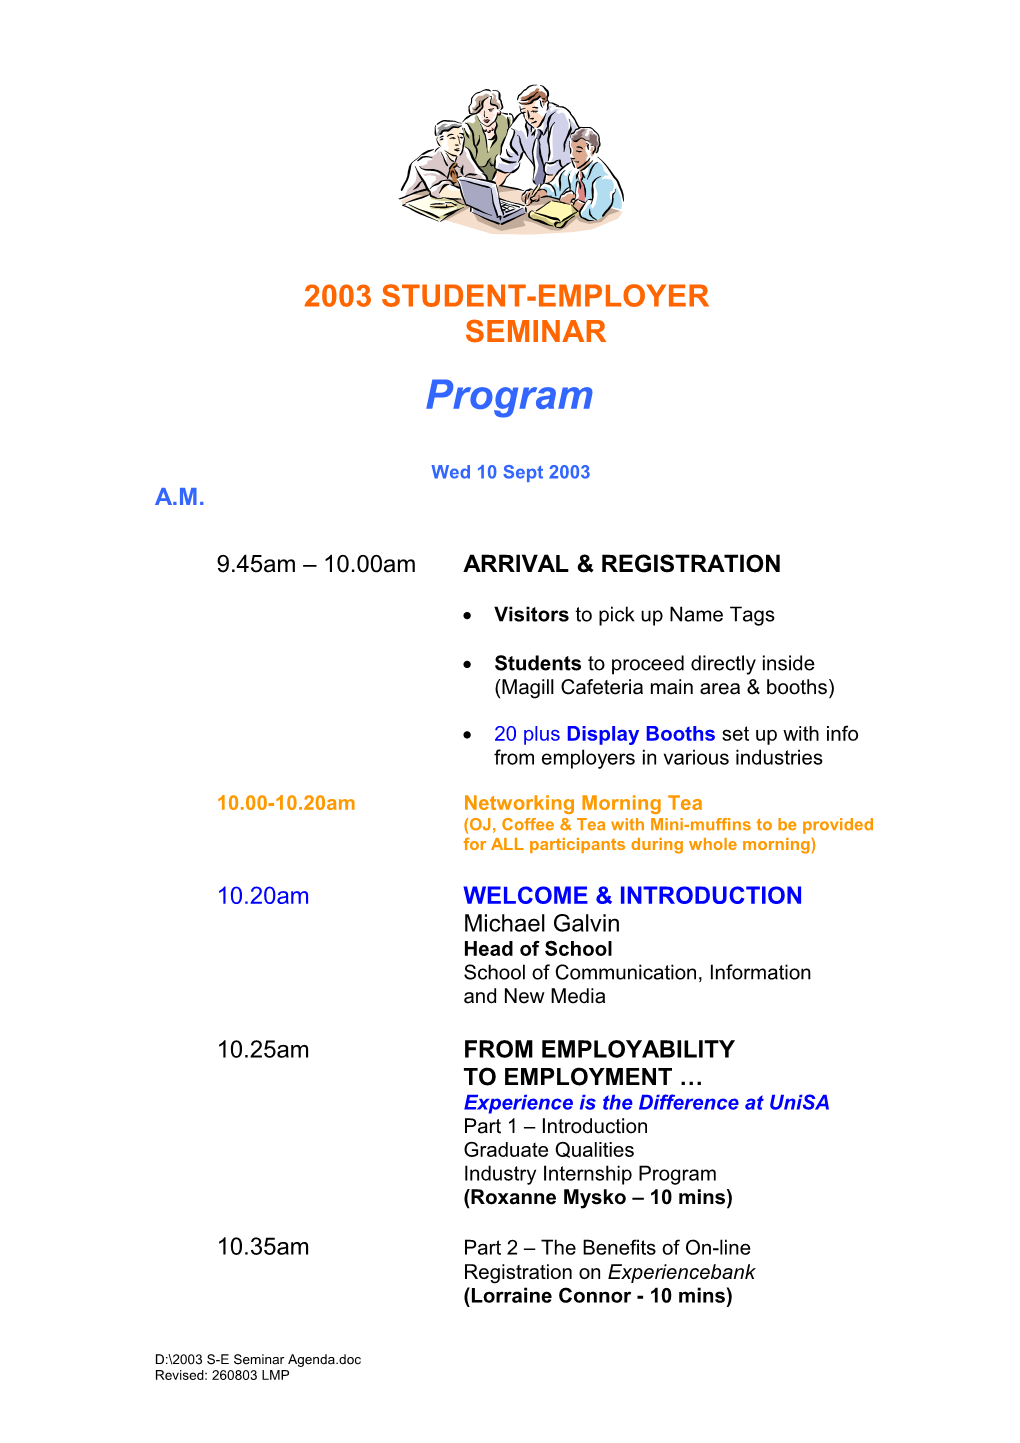 2001 Student-Employer Seminar